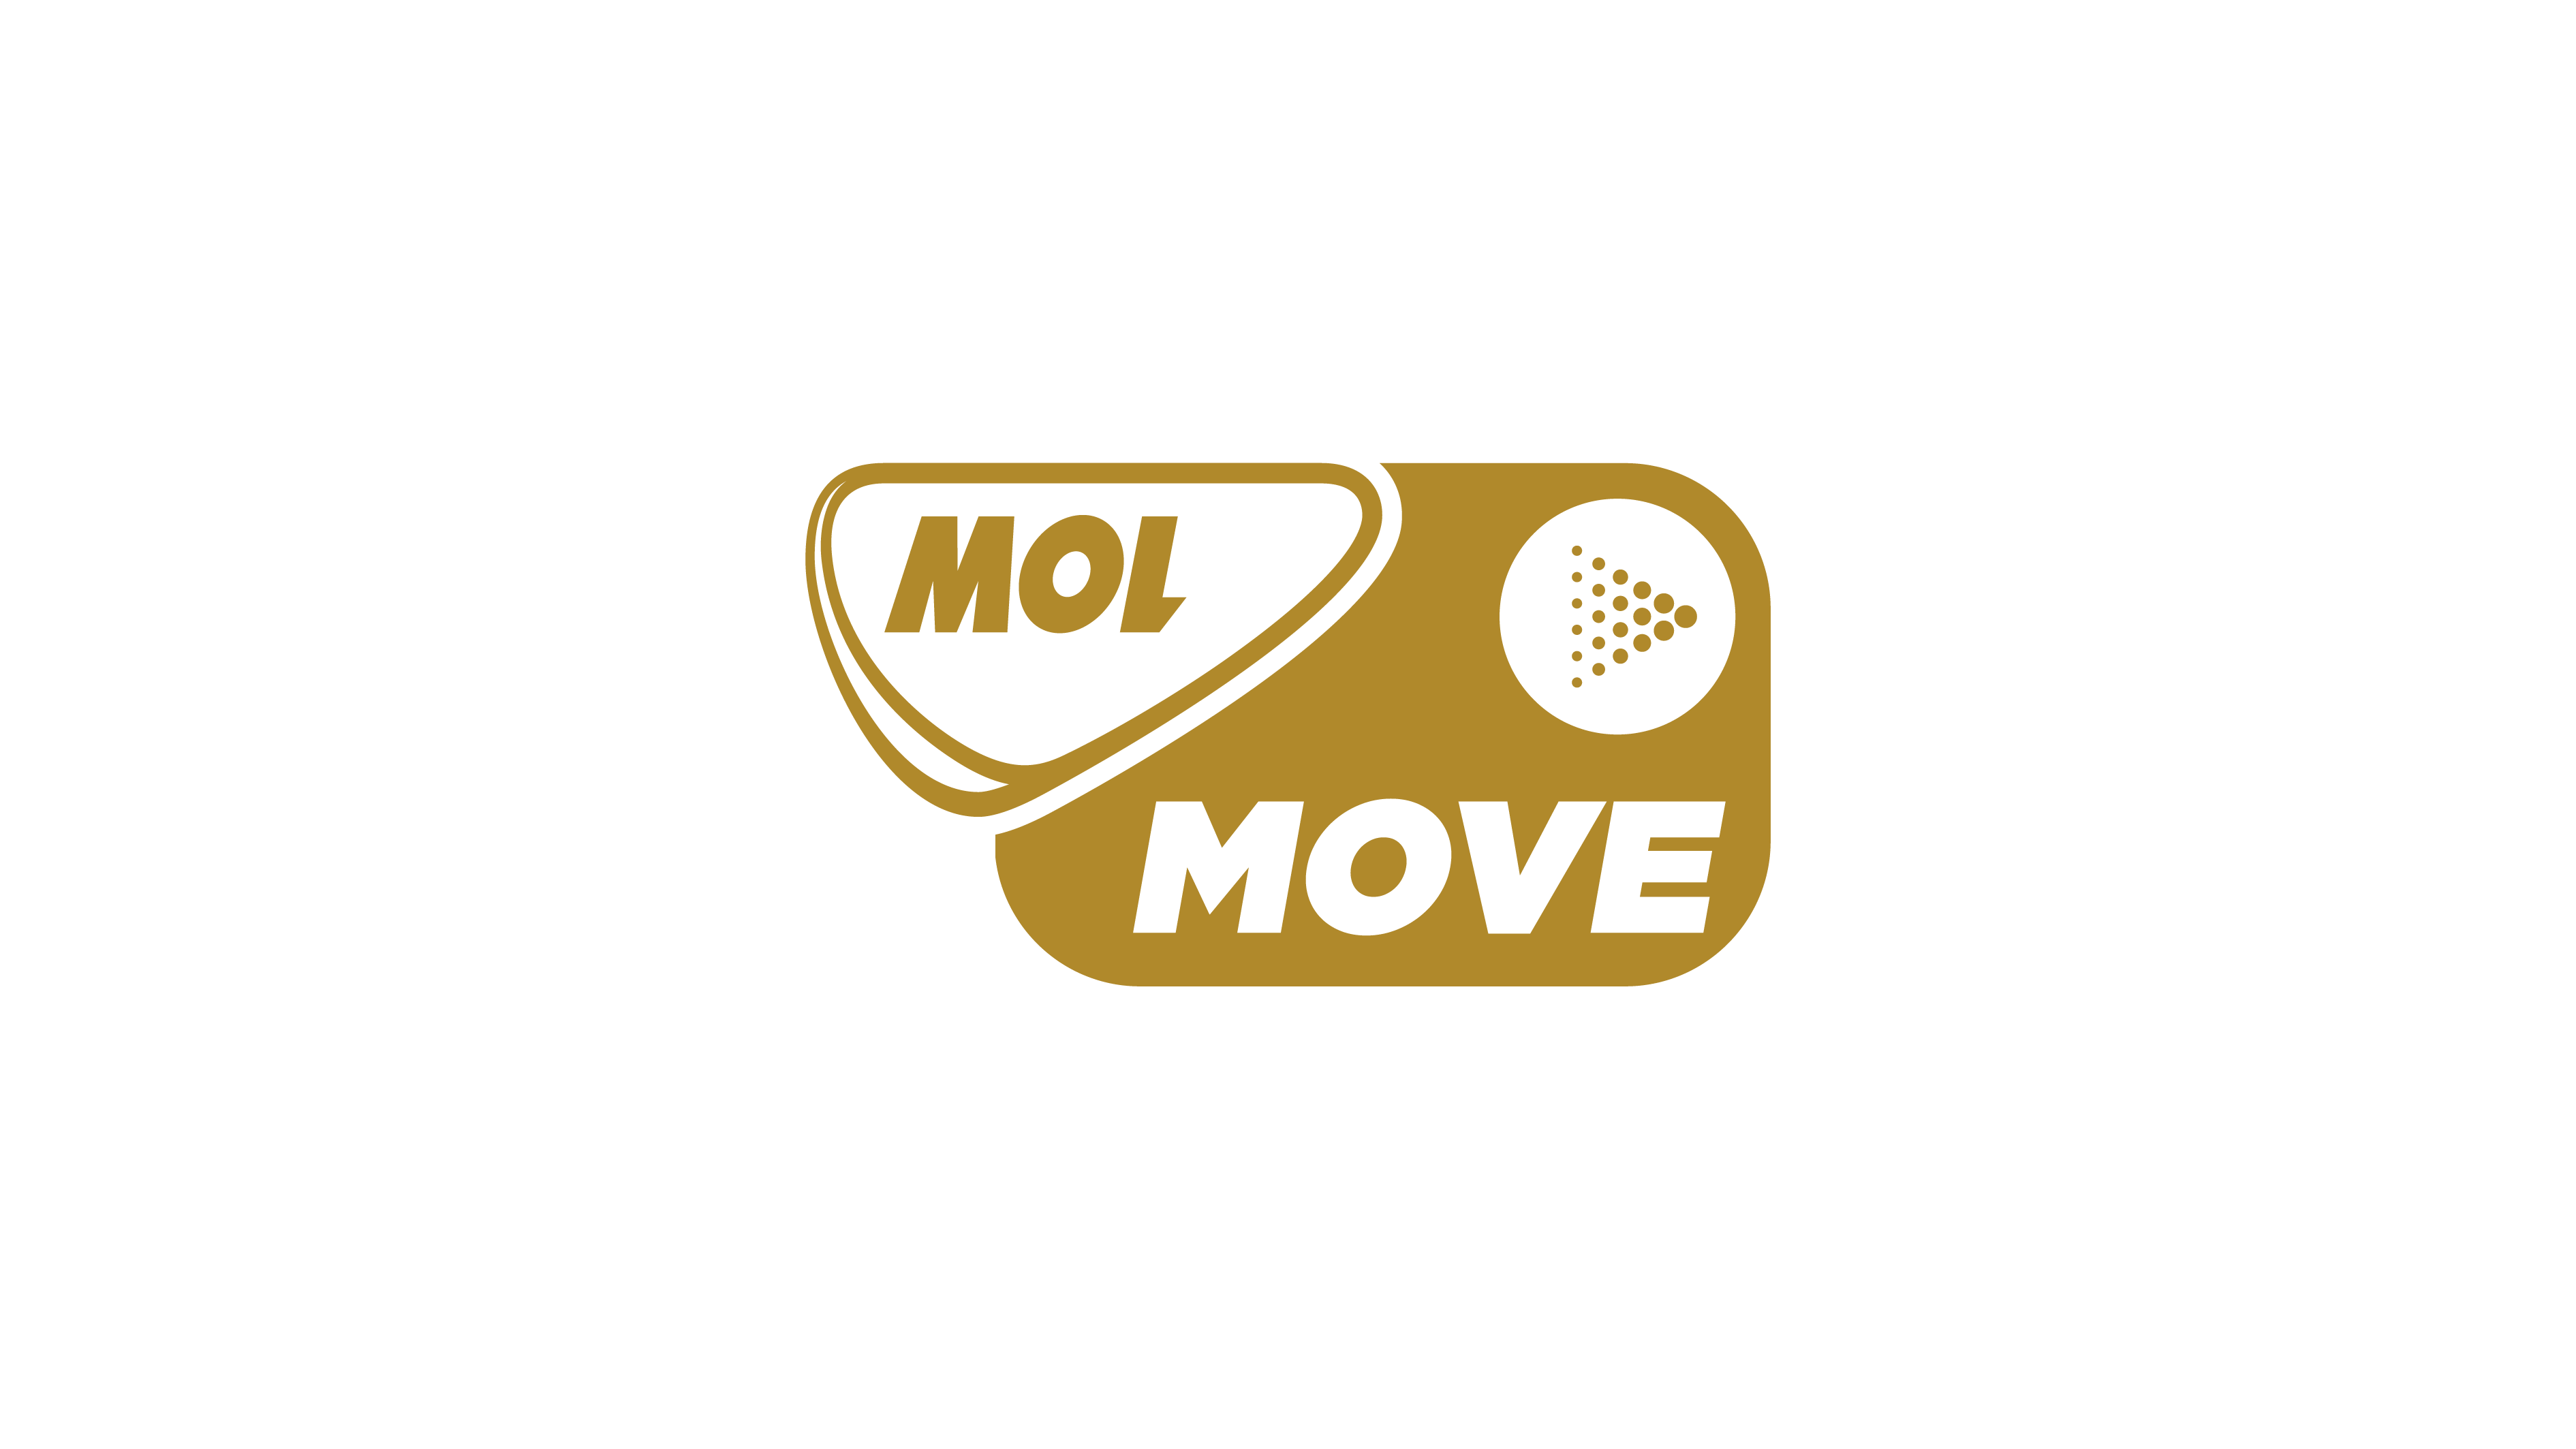 MOL_MOVE_LOGO-04